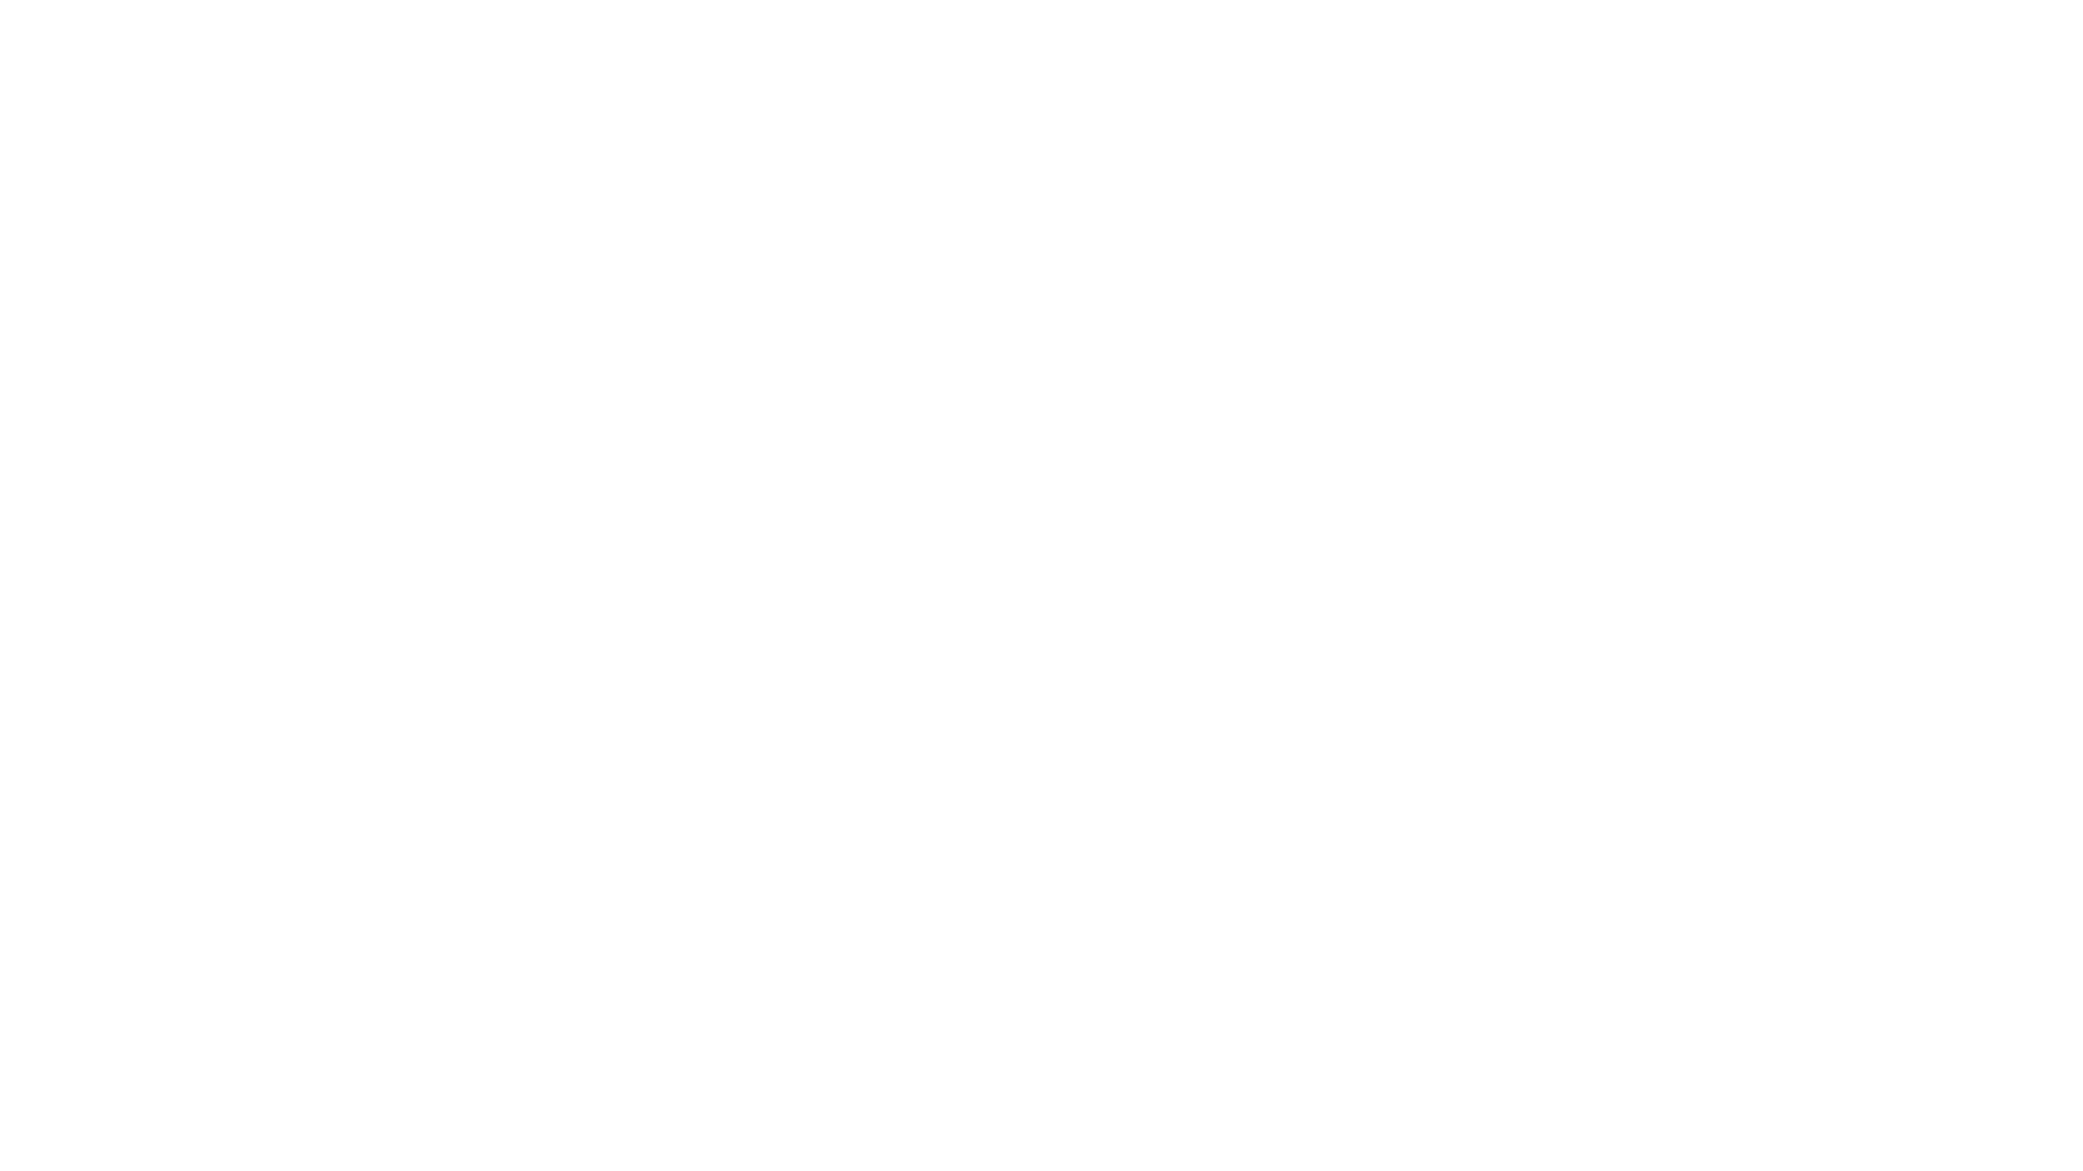 Wir sind CarlMakesMedia